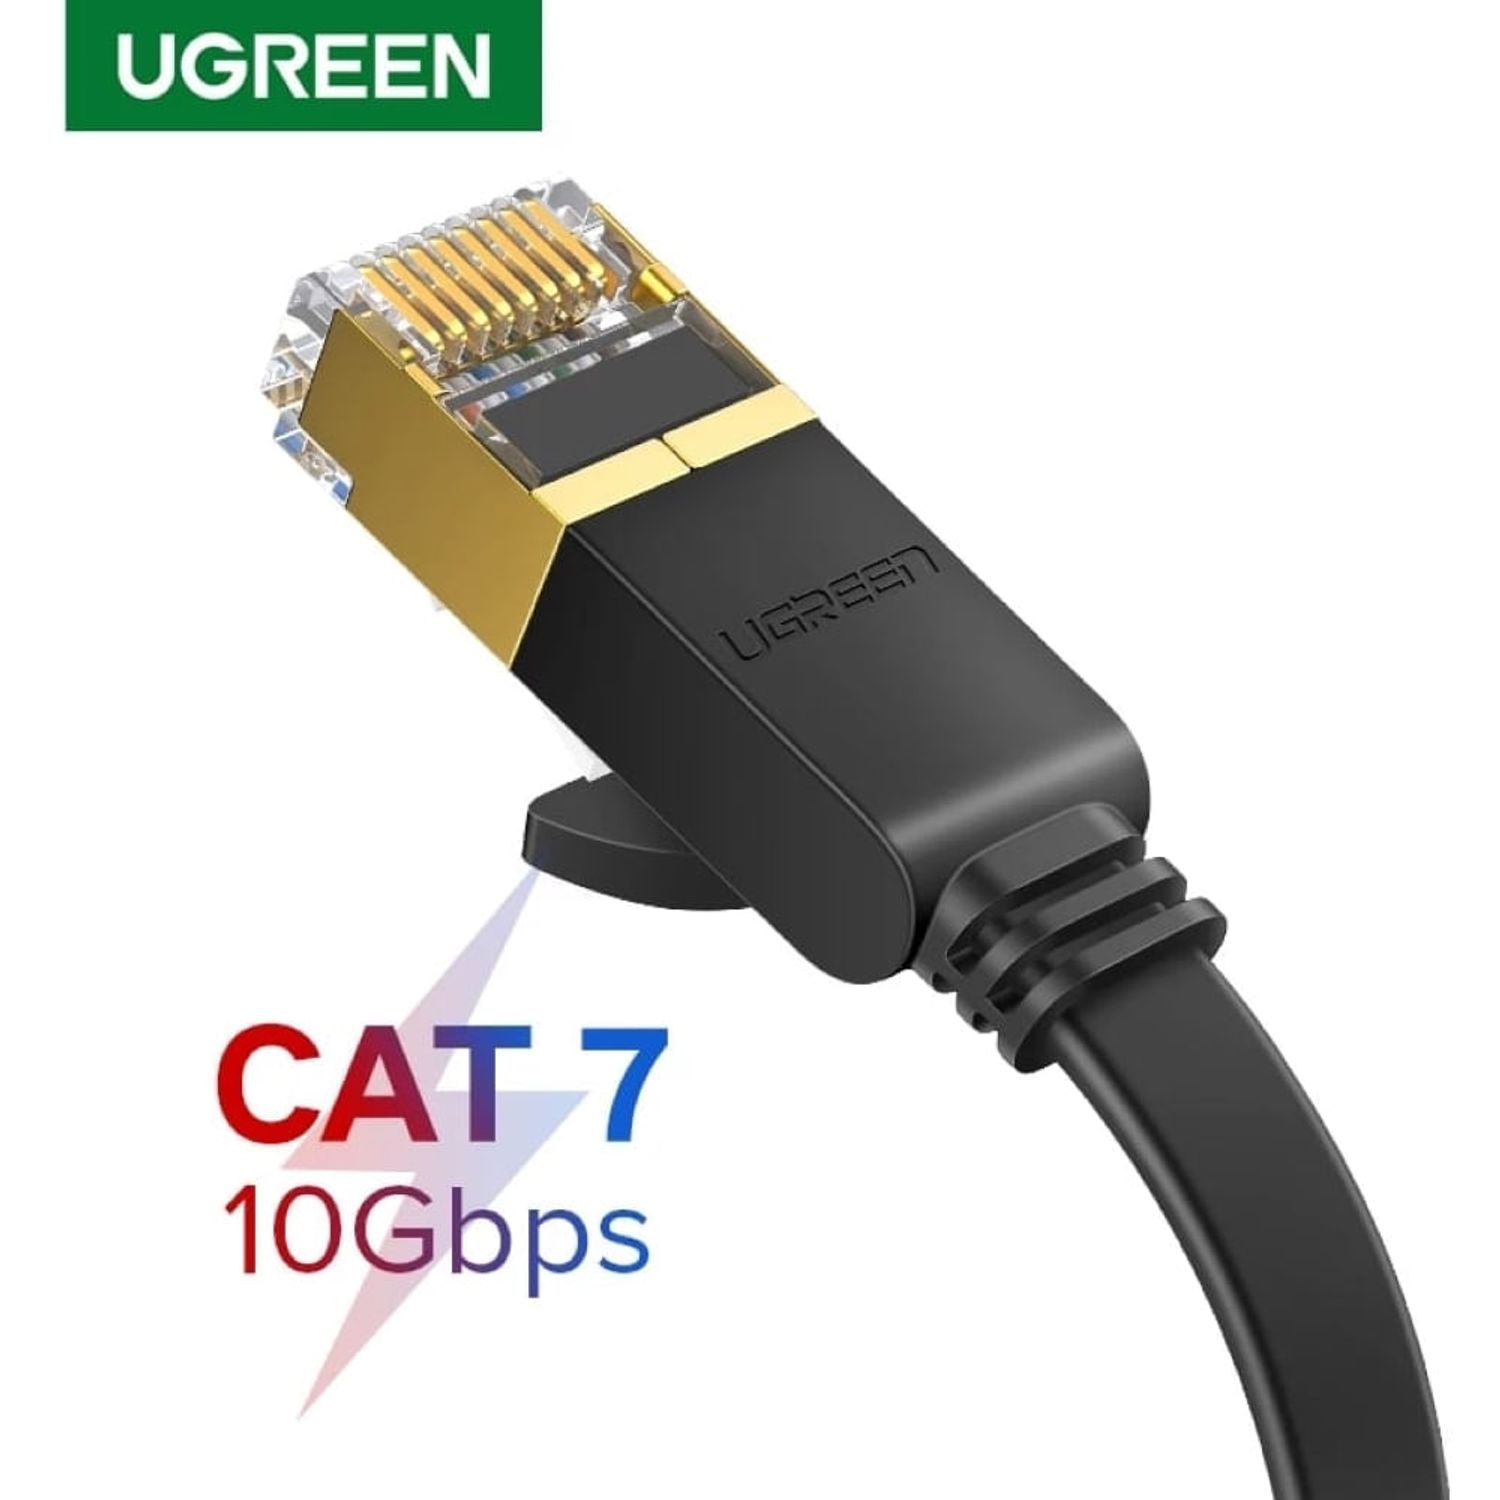 Cable Ethernet Cat 8 de 10 metros Remallado Ugreen I Oechsle - Oechsle